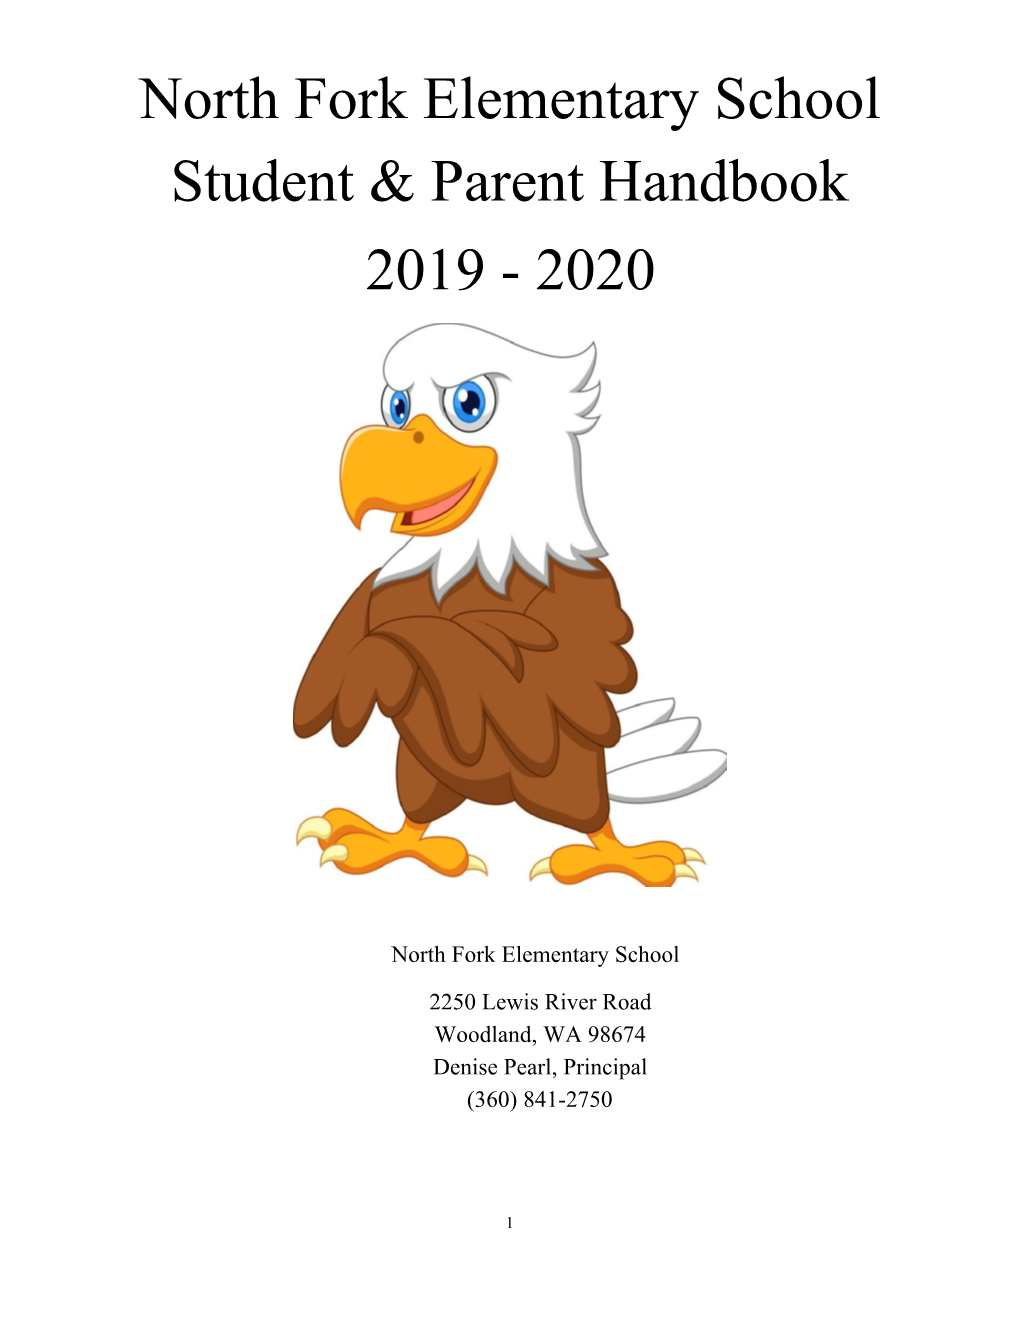 North Fork Elementary School Student & Parent Handbook 2019